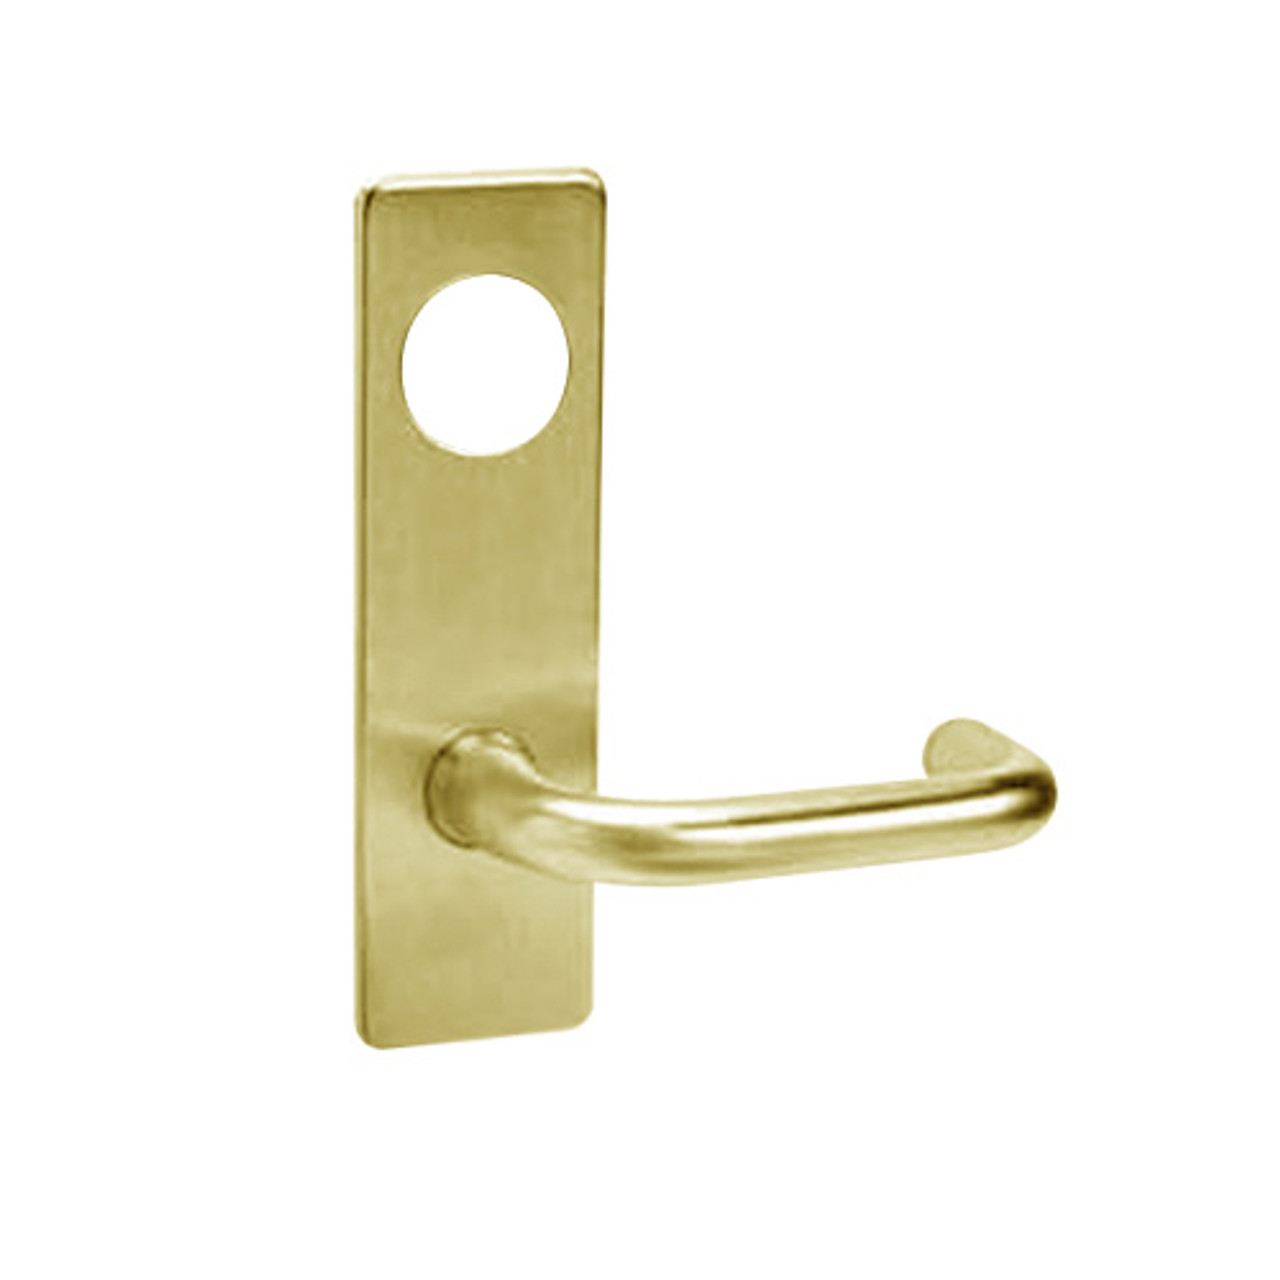 ML2022-LSP-606 Corbin Russwin ML2000 Series Mortise Store Door Locksets with Lustra Lever with Deadbolt in Satin Brass